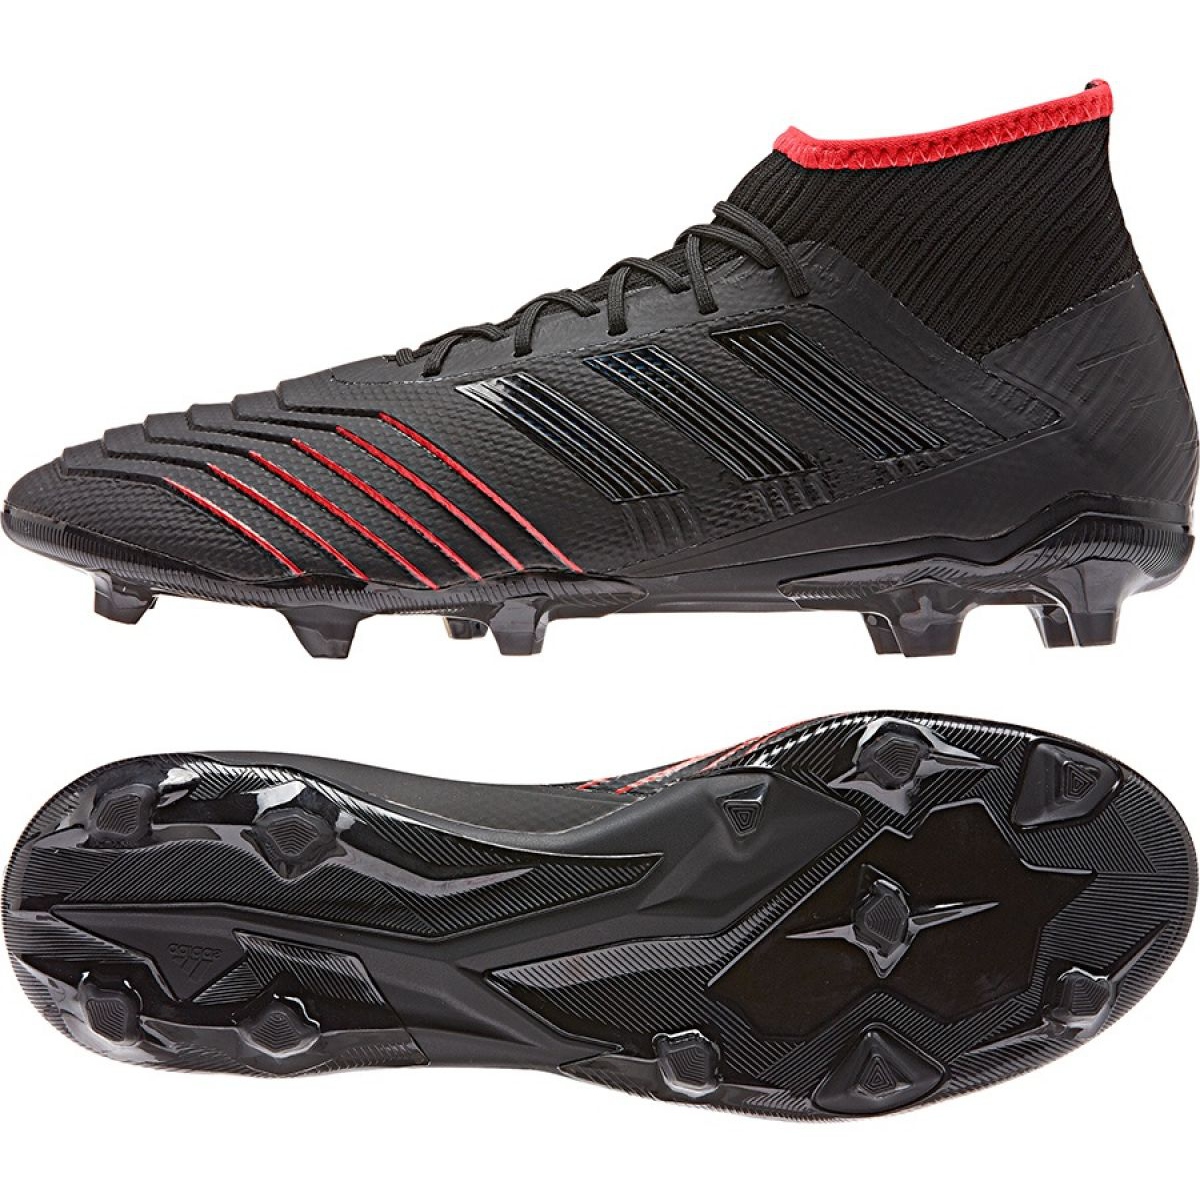 Jardines frecuencia lanzar Adidas Predator 19.2 Fg M D97939 football boots black black - KeeShoes